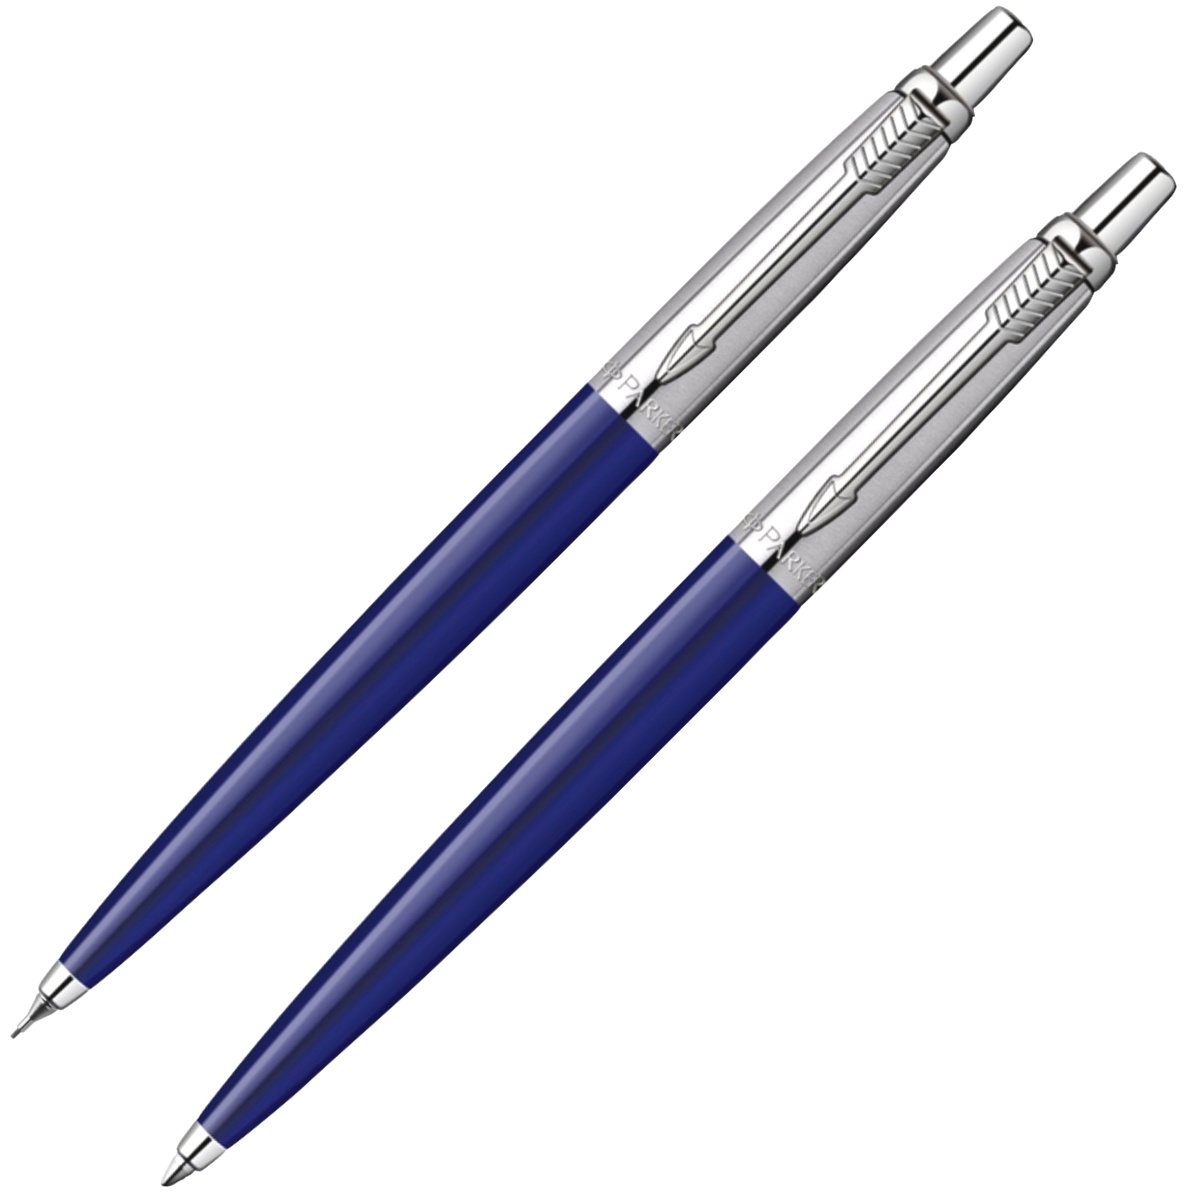  Набор Parker Jotter Core KB61: шариковая ручка и механический карандаш, Blue CT, фото 2